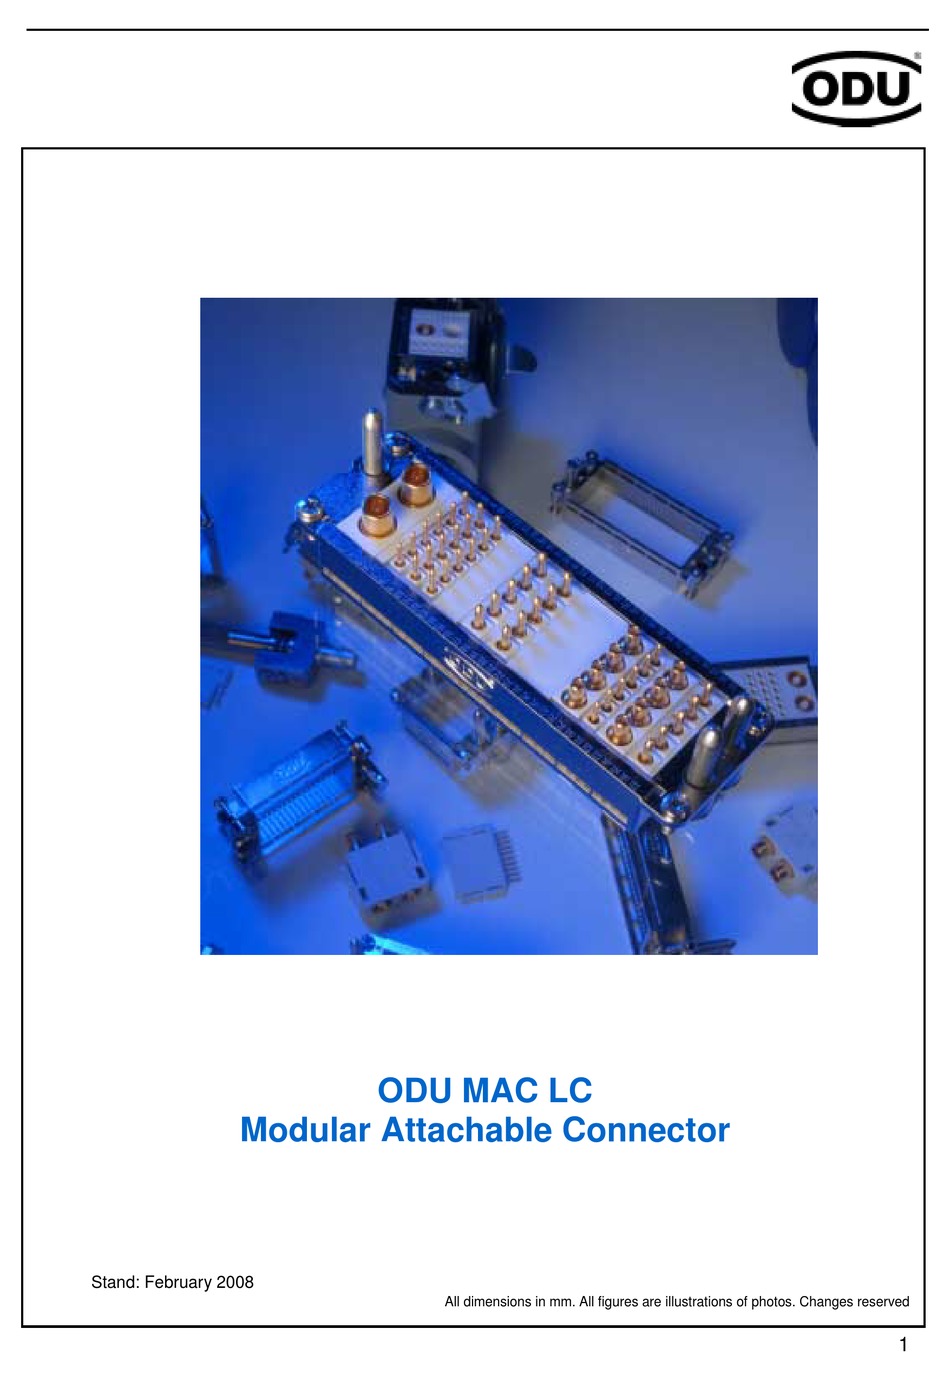 ODU MAC LC PRODUCT INFORMATION Pdf Download ManualsLib